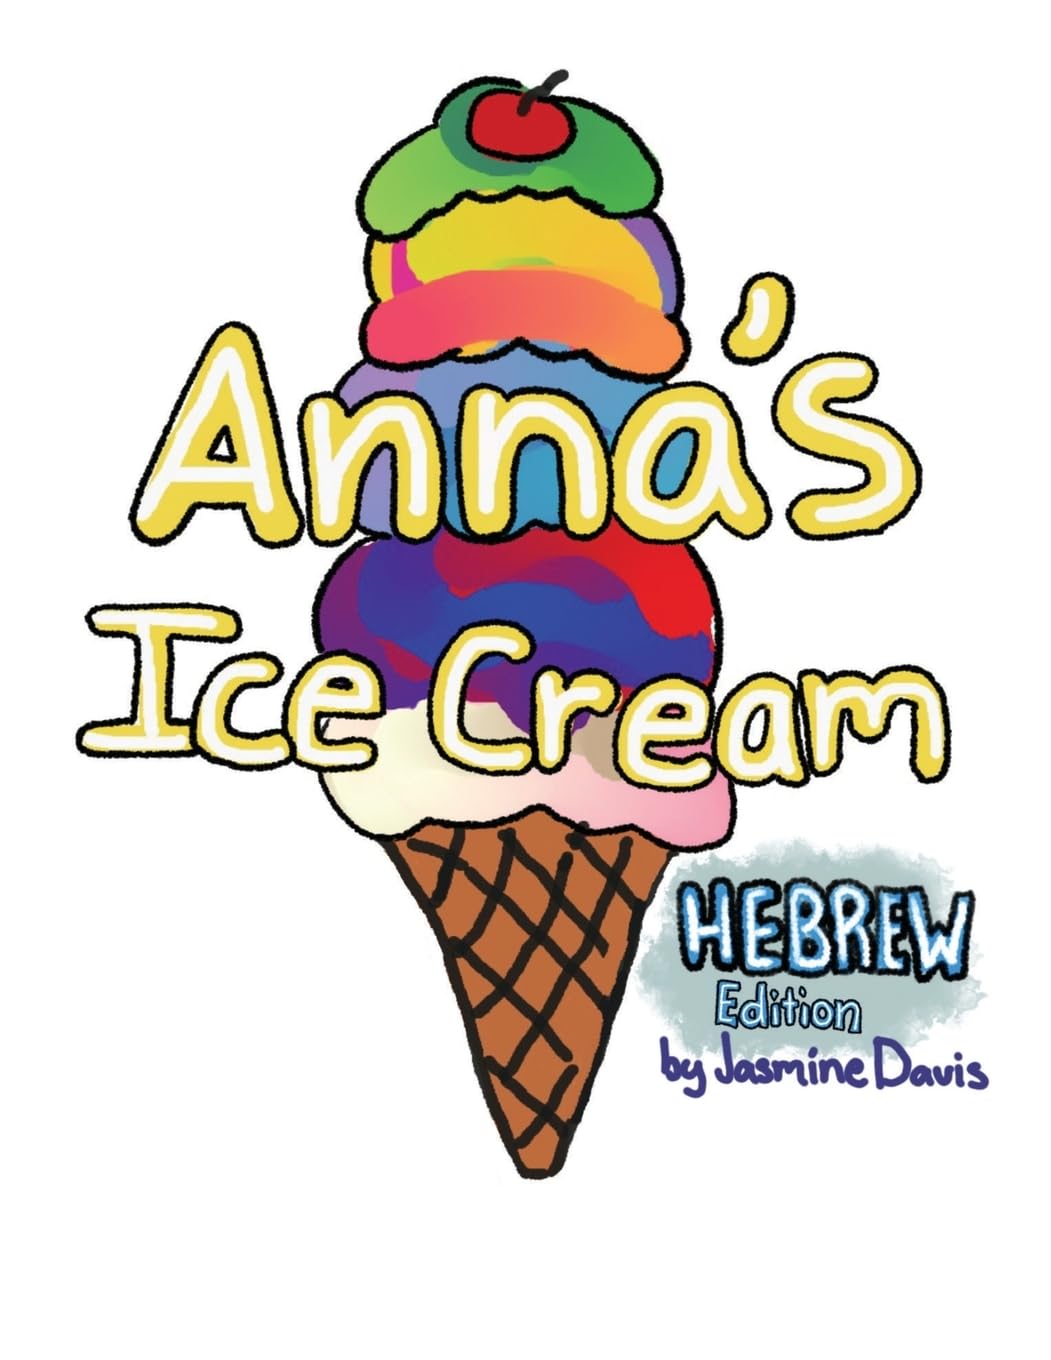 Anna’s Ice Cream Hebrew Edition